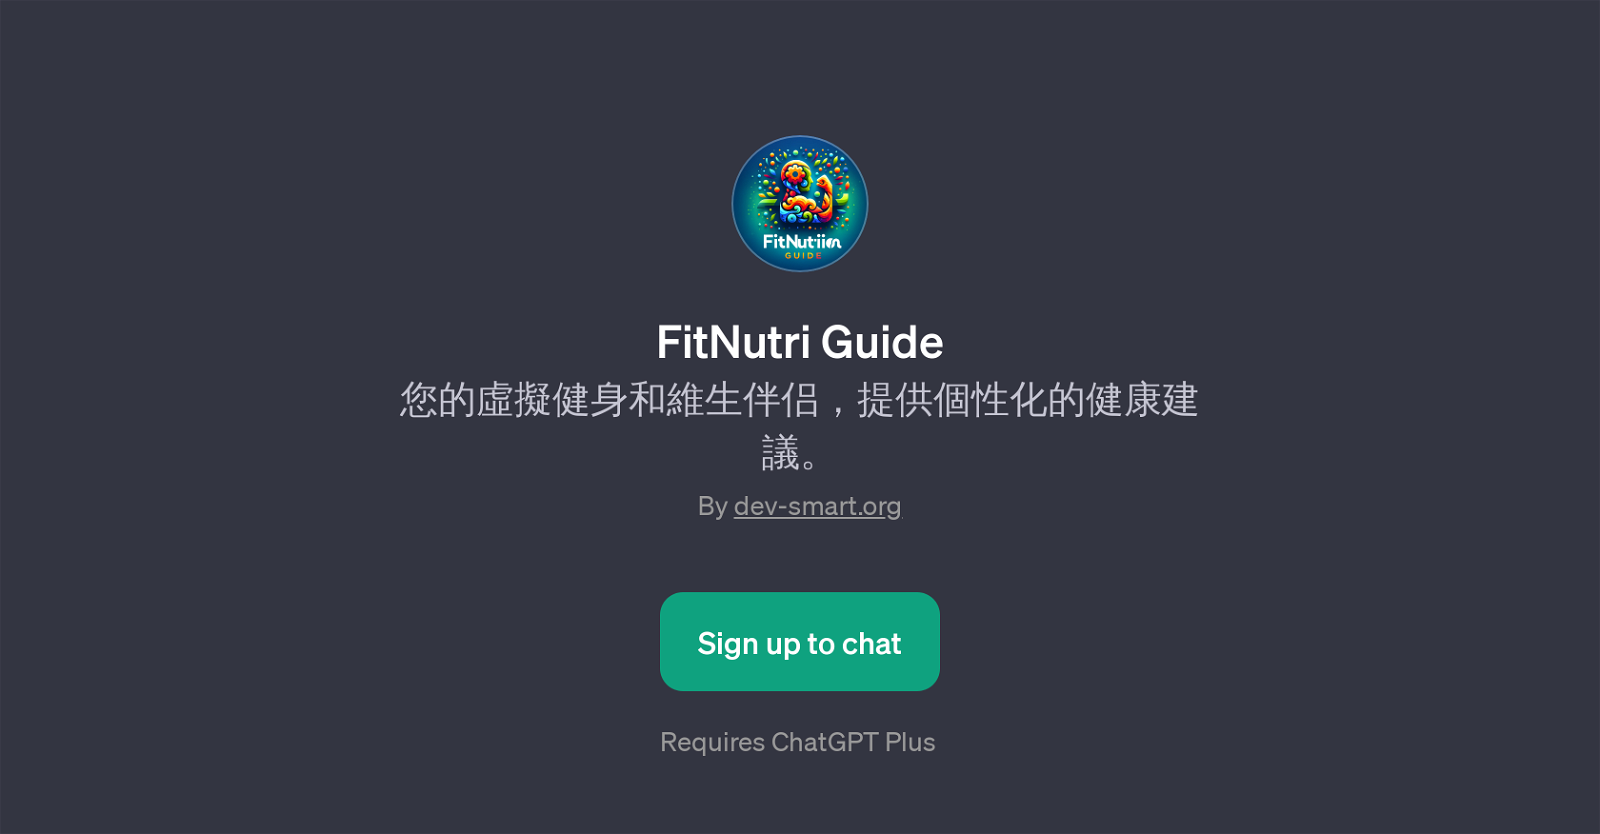 FitNutri Guide website